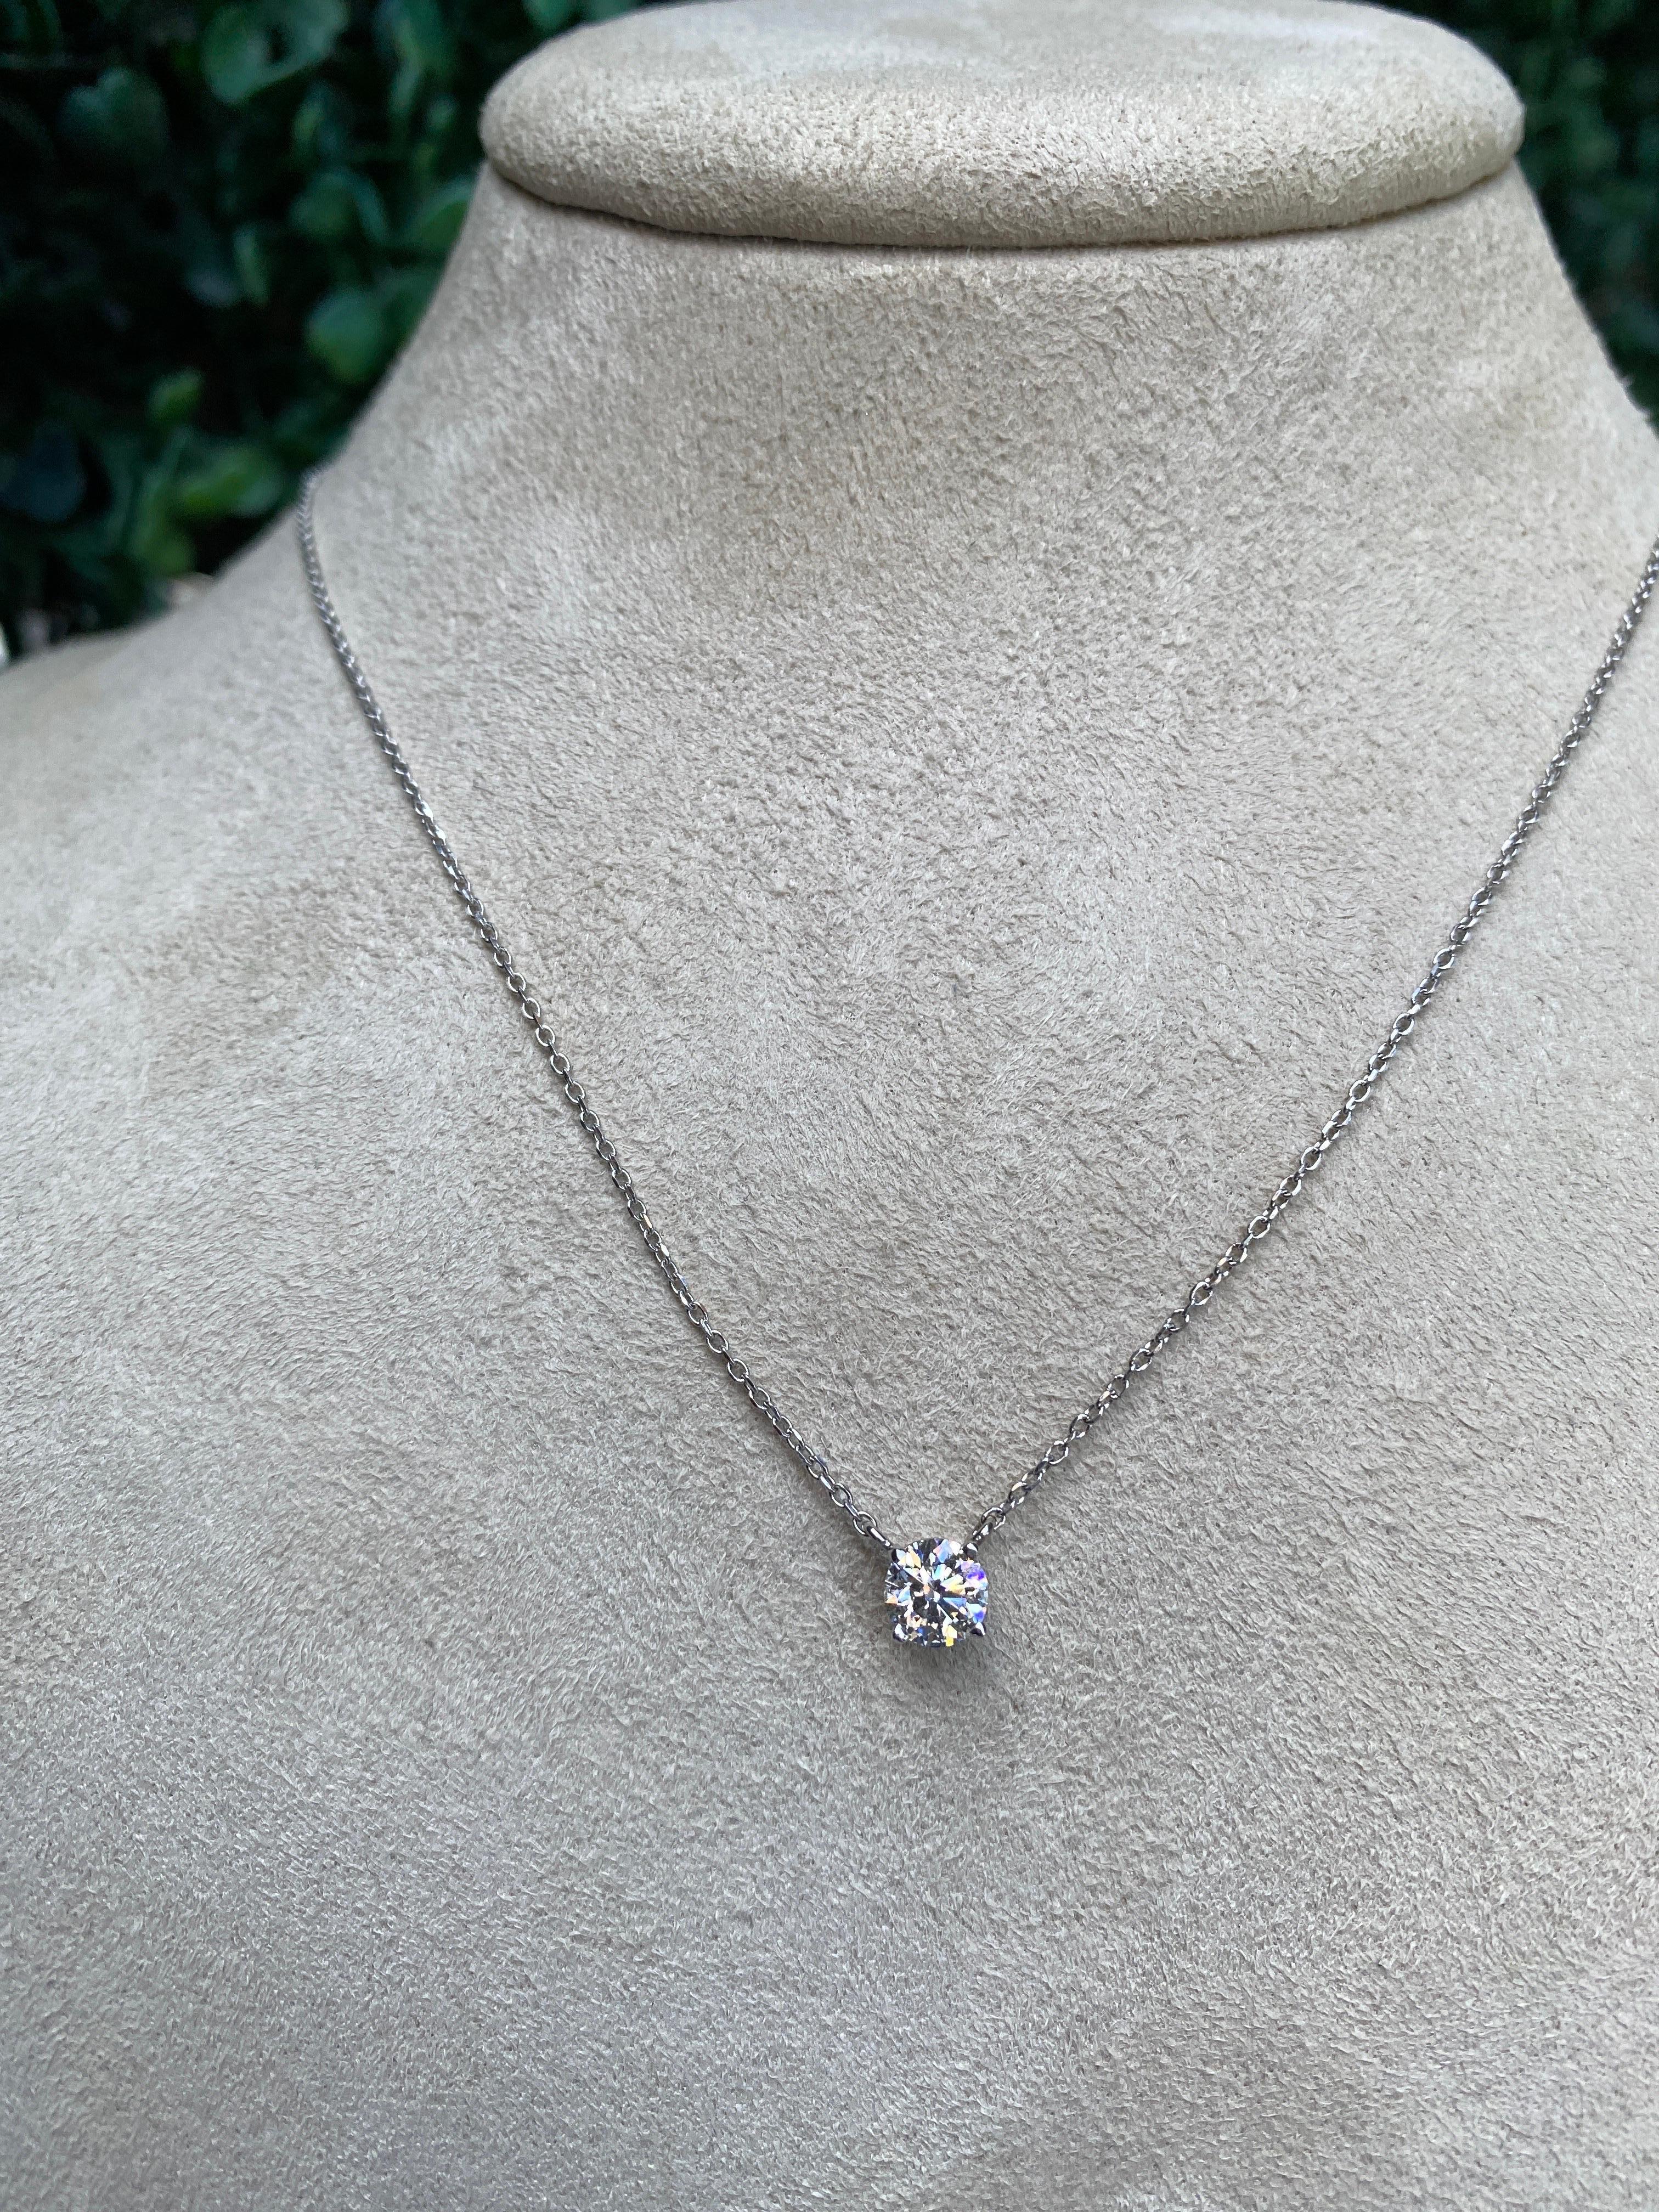 0.50 Carat Round Natural Diamond, H-I SI2, 14 Karat White Gold Pendant Necklace For Sale 3